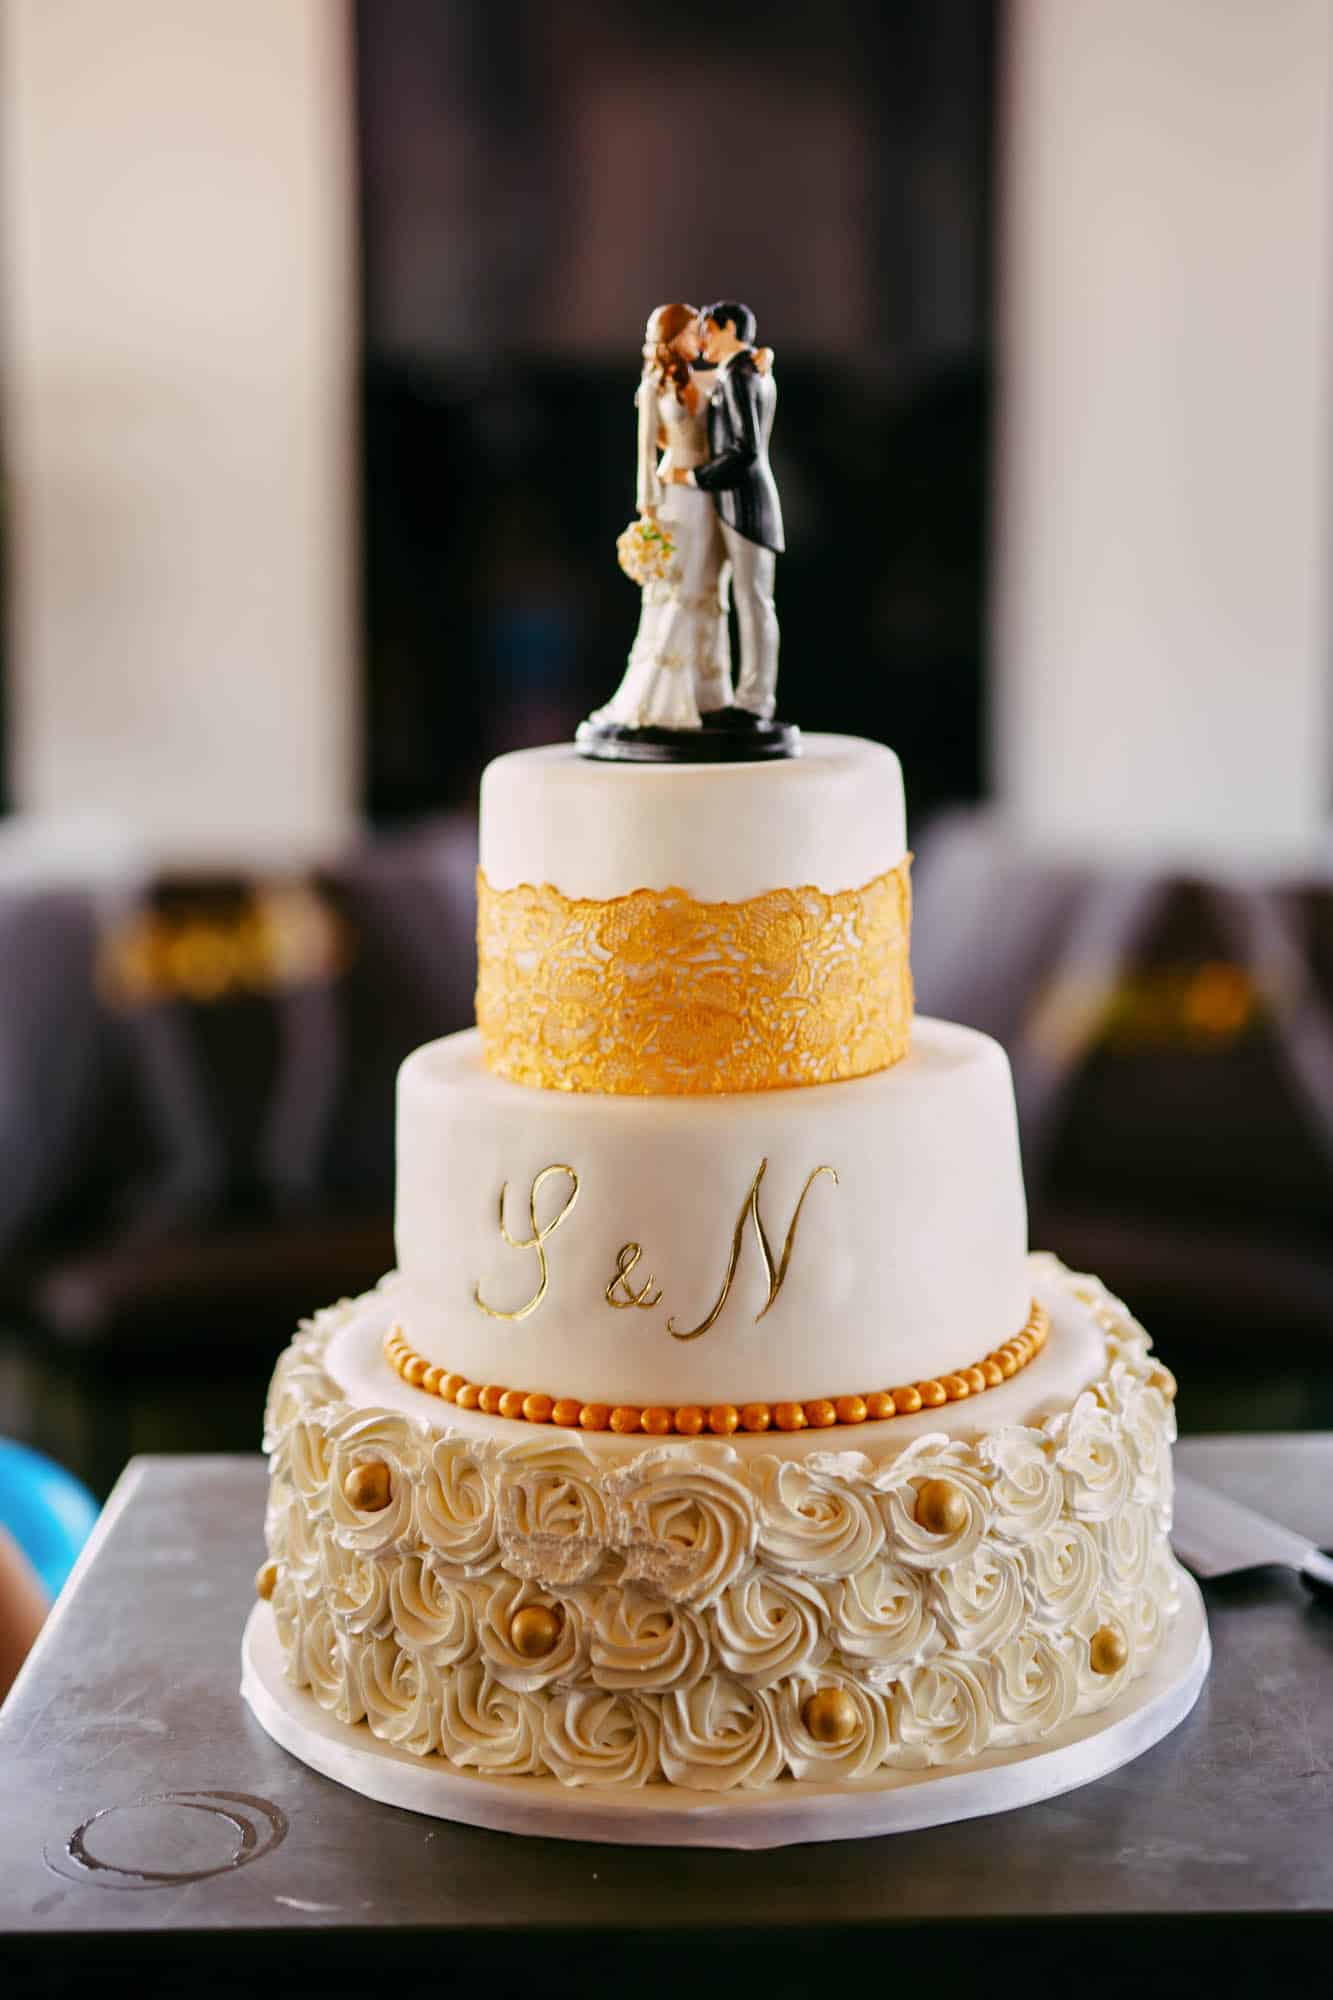         Description: A wedding cake with a couple on top.